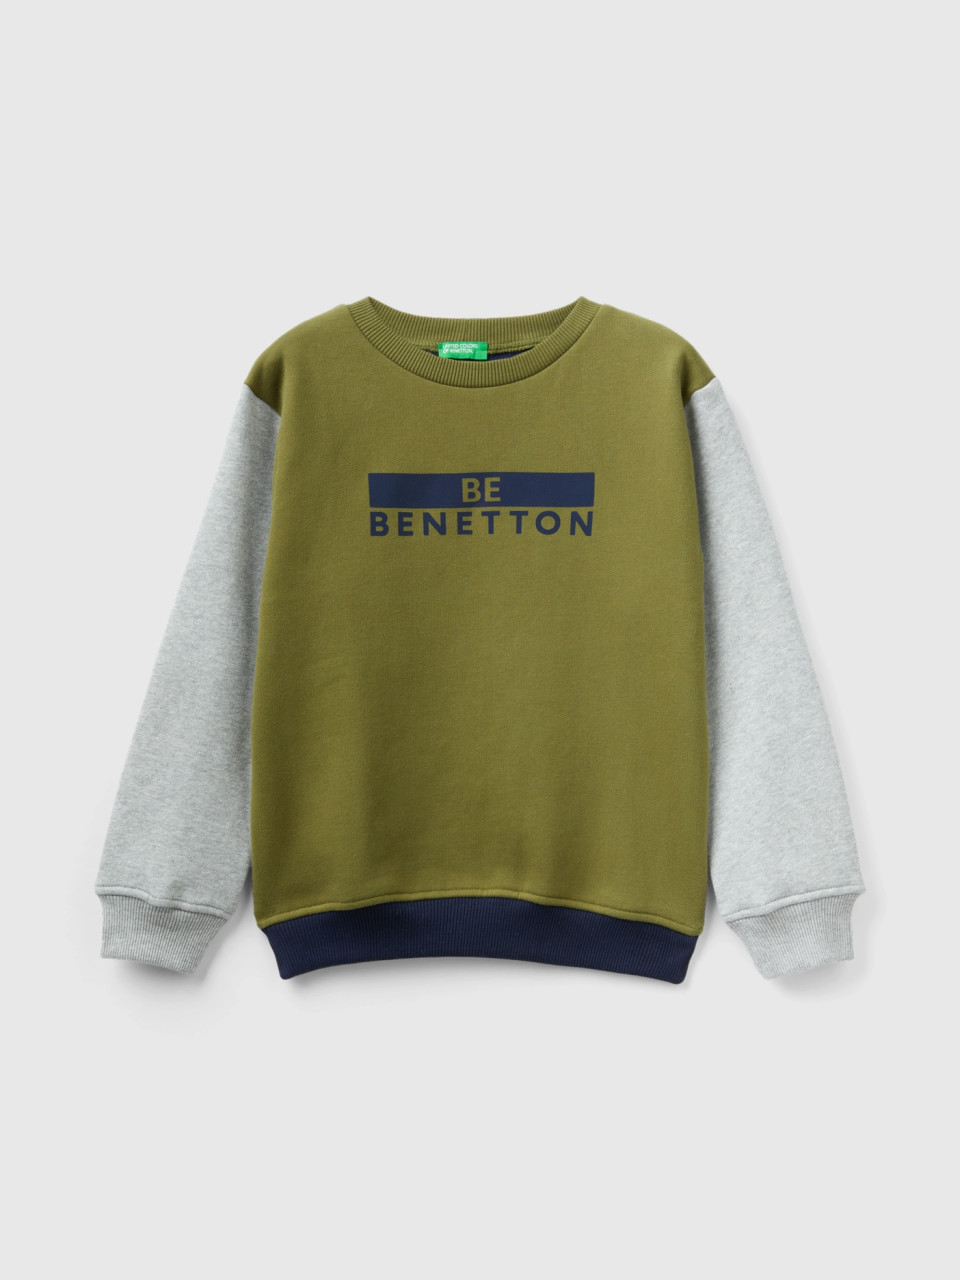 Benetton, Warm Sweatshirt With Logo, Multi-color, Kids